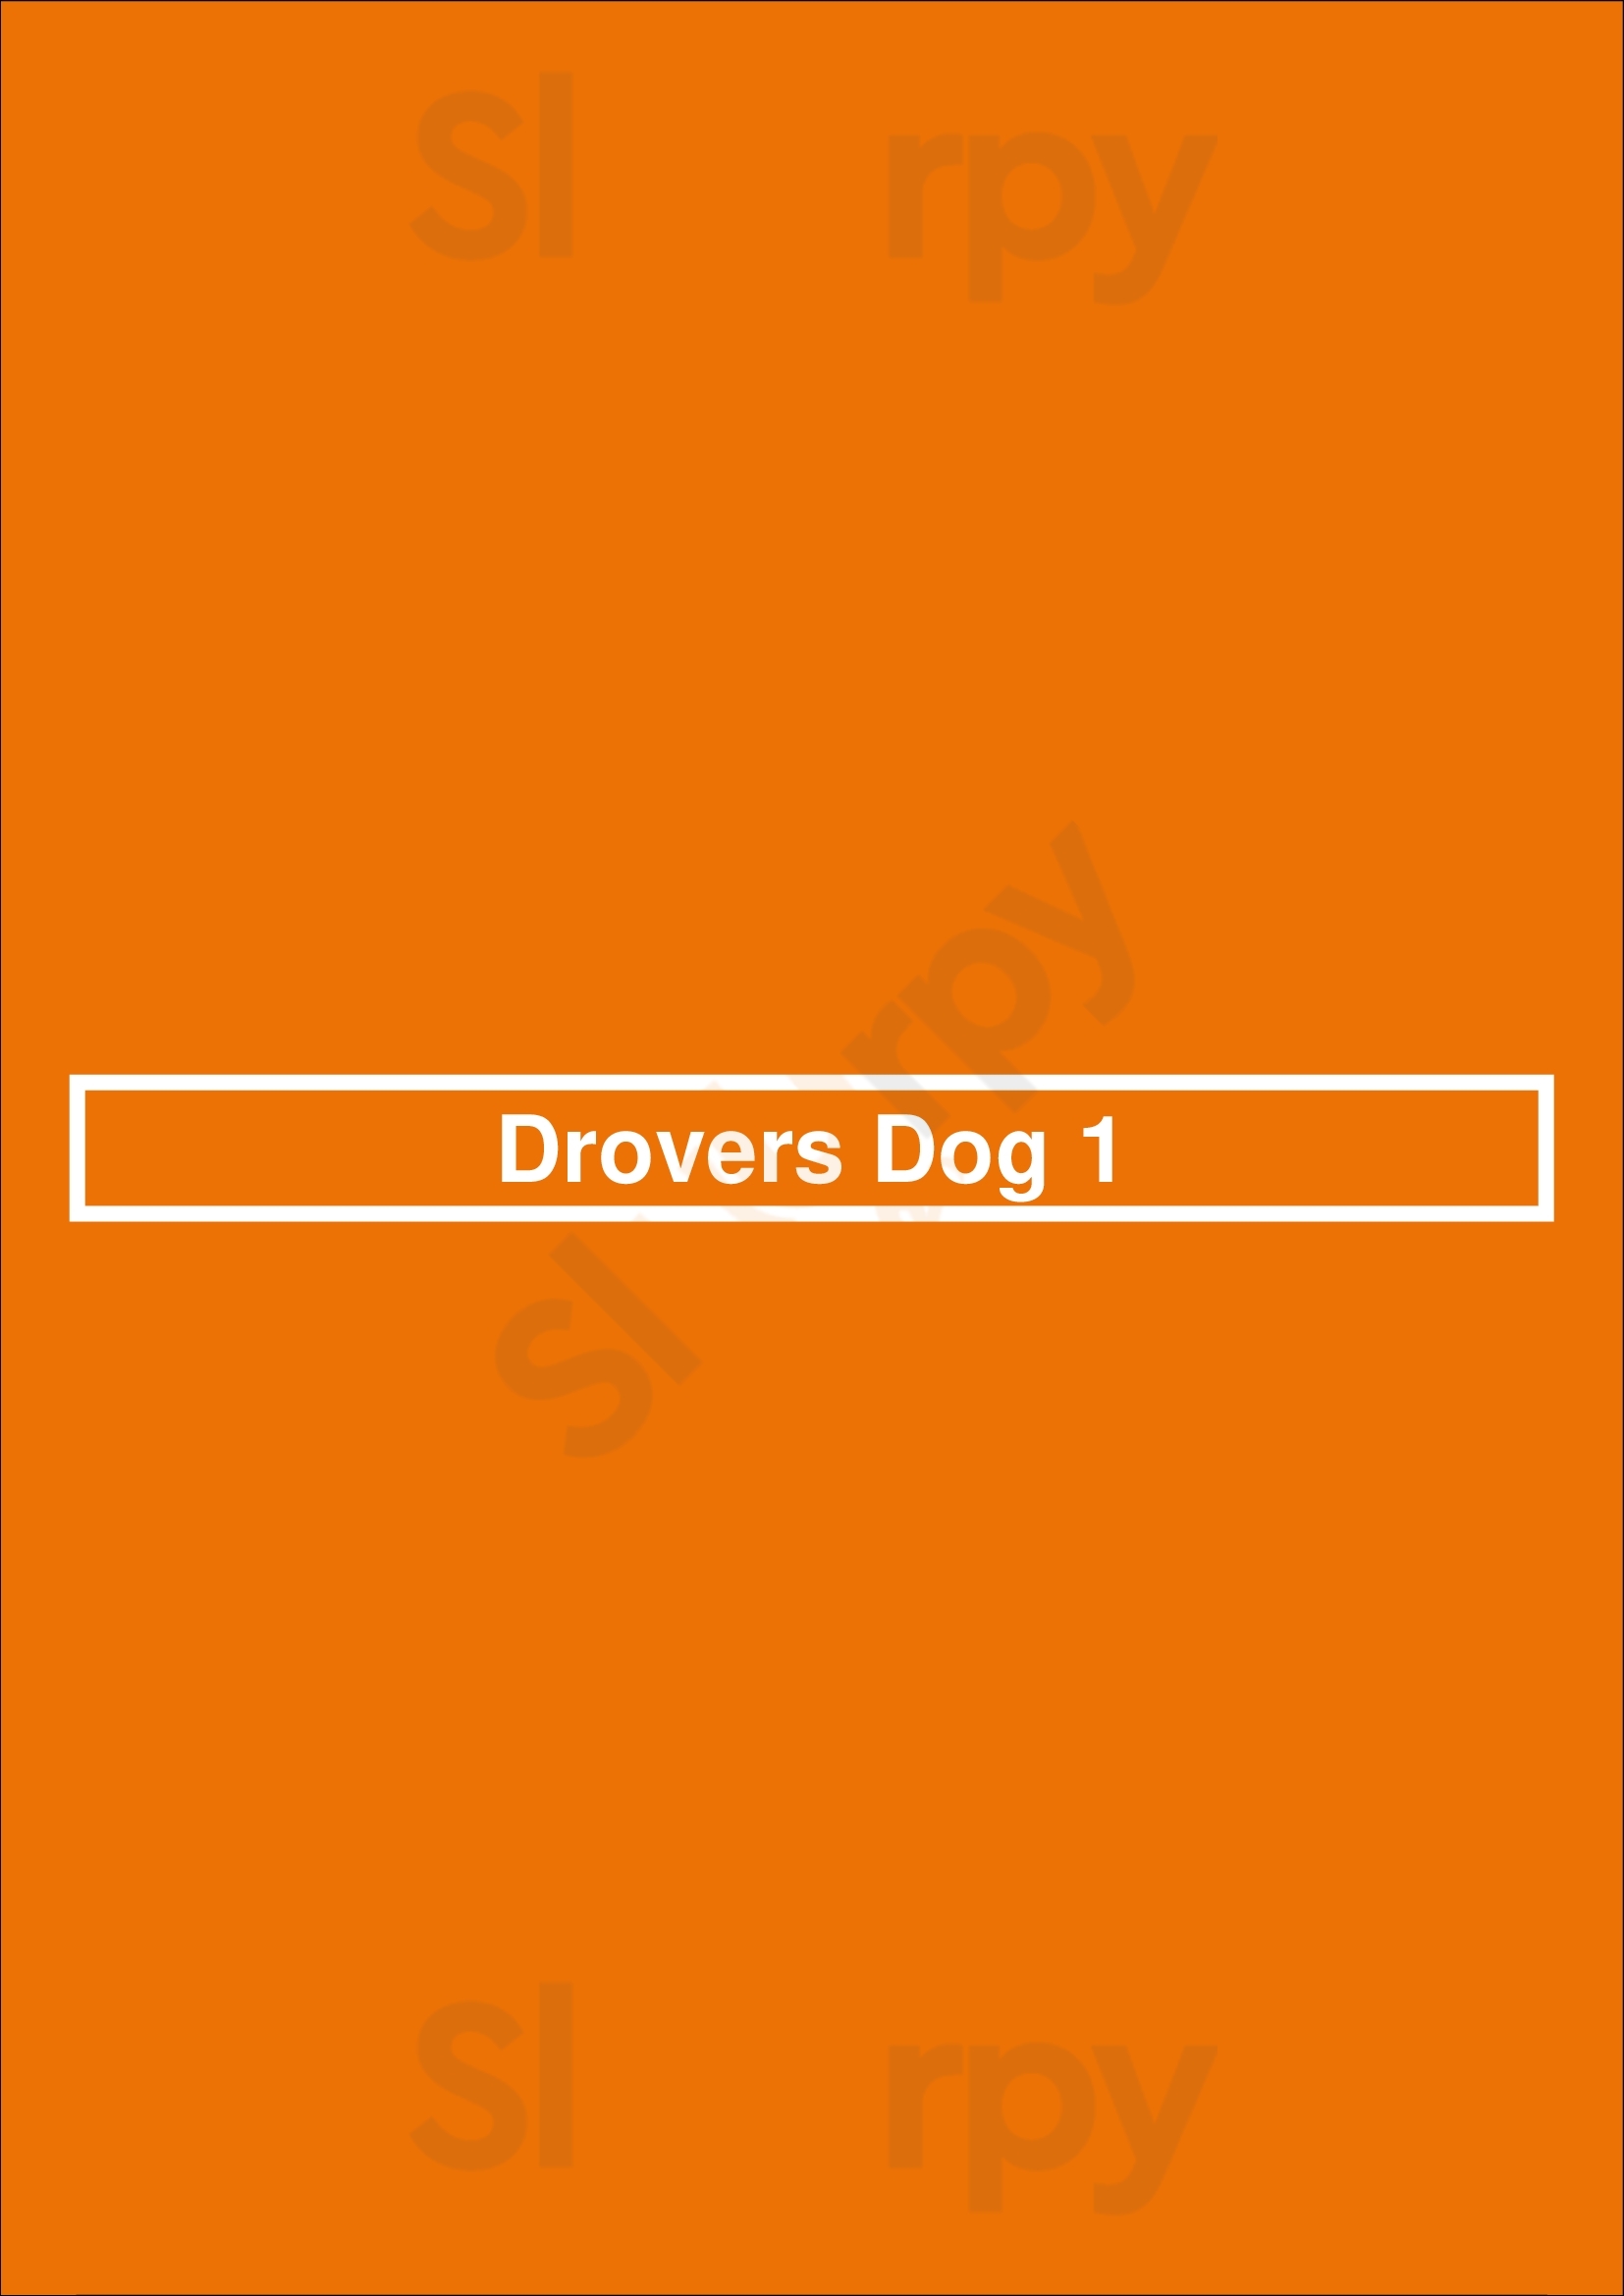 Drovers Dog 1 Amsterdam Menu - 1